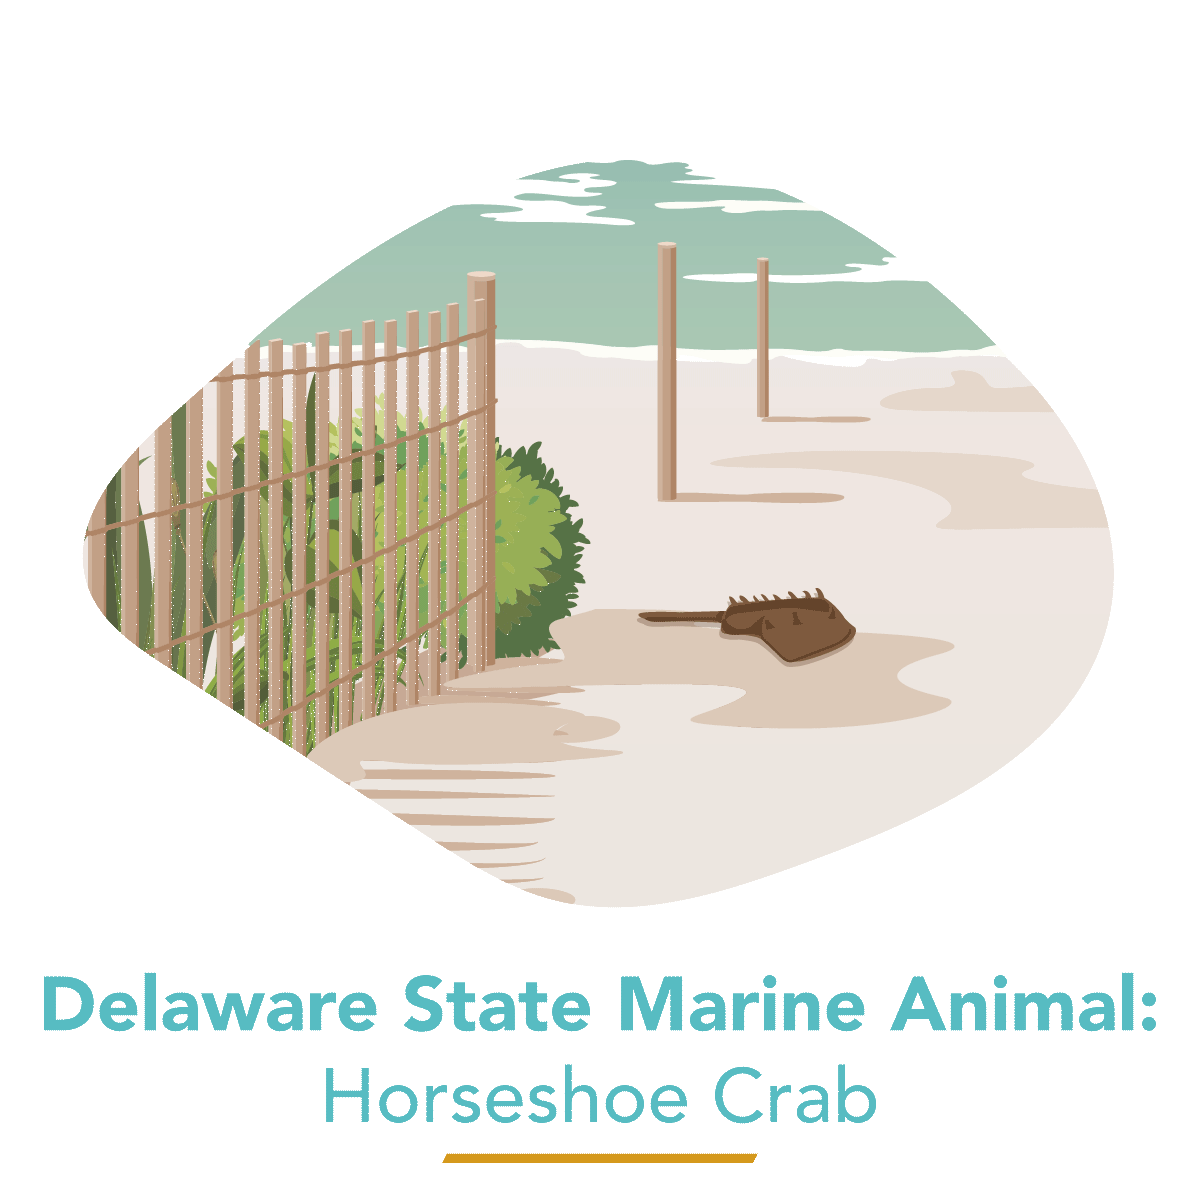 Horseshoe Crab - Delaware's State Marine Animal